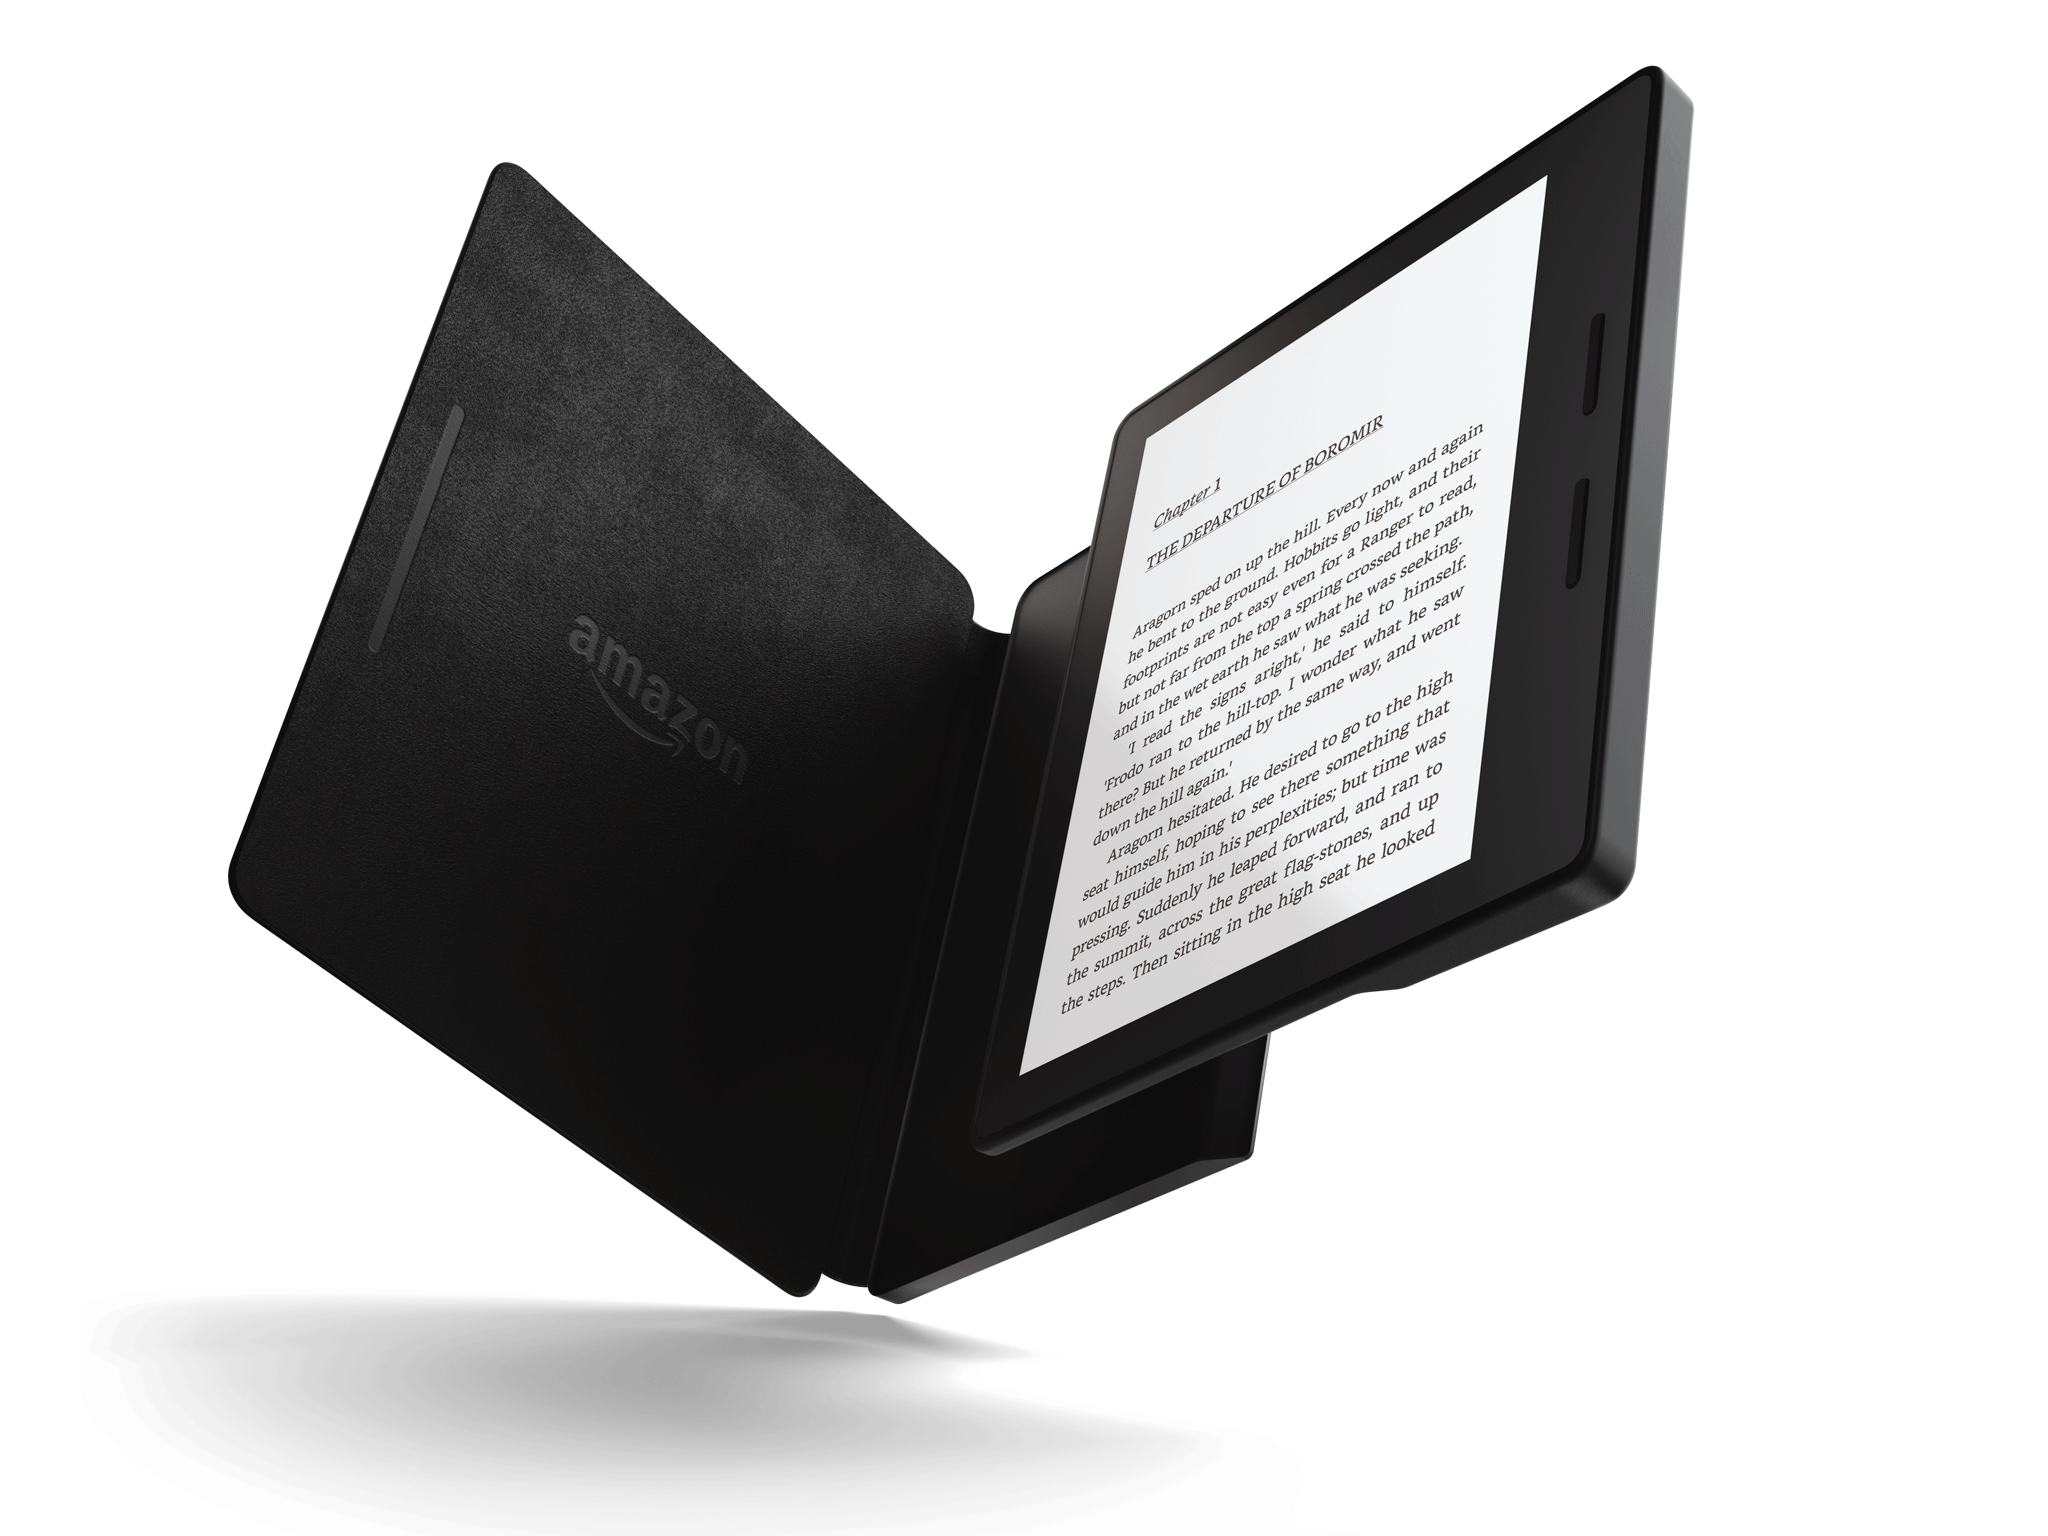 Kindle Oasis Amazon's impressive new ereader is the most advanced yet